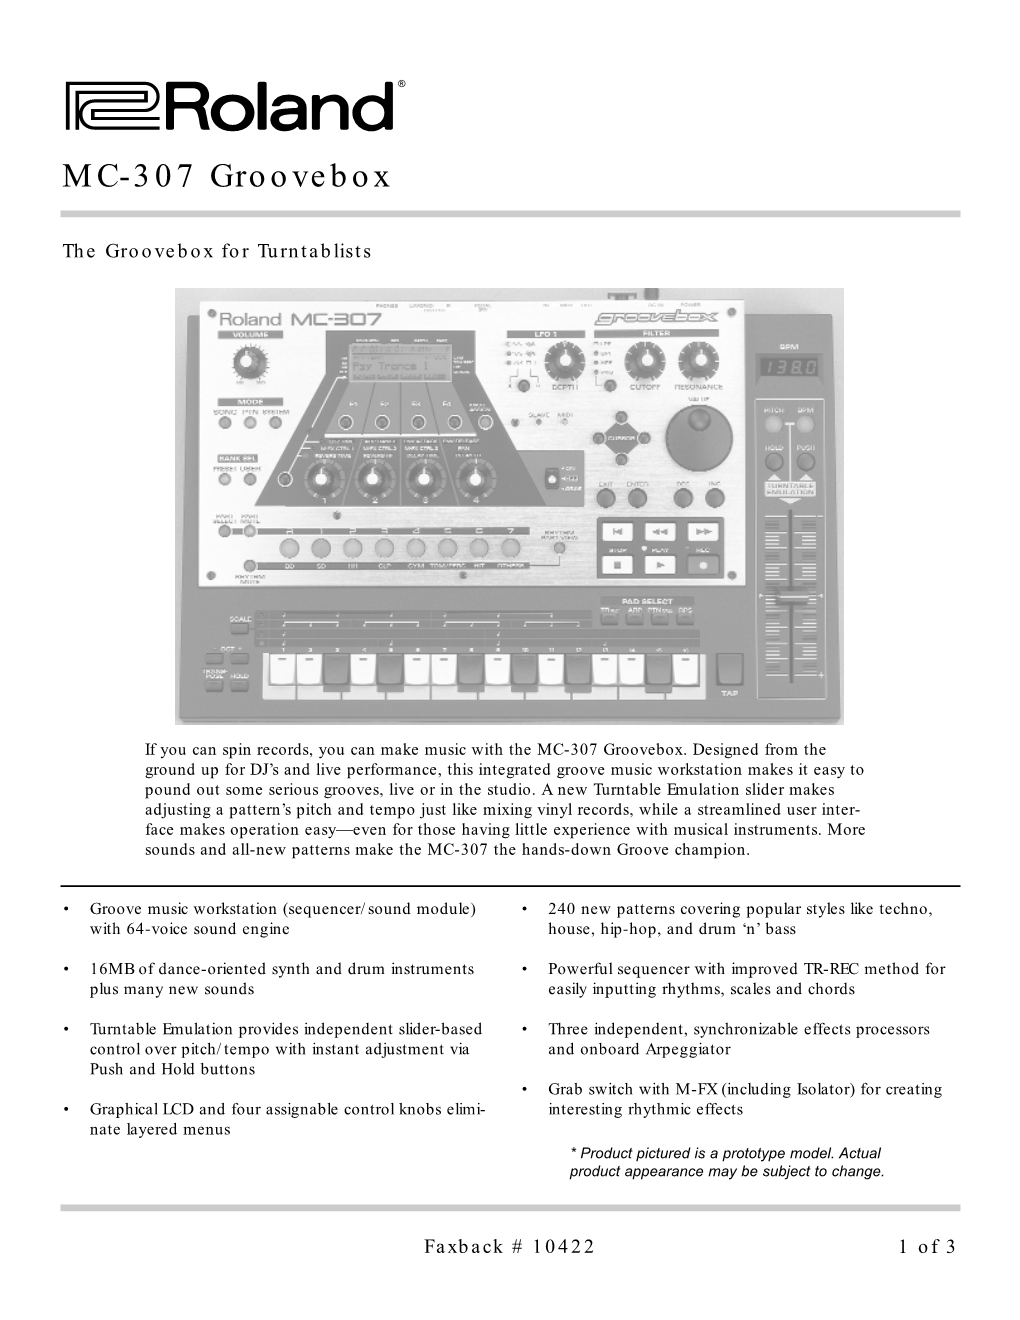 MC-307 Faxback